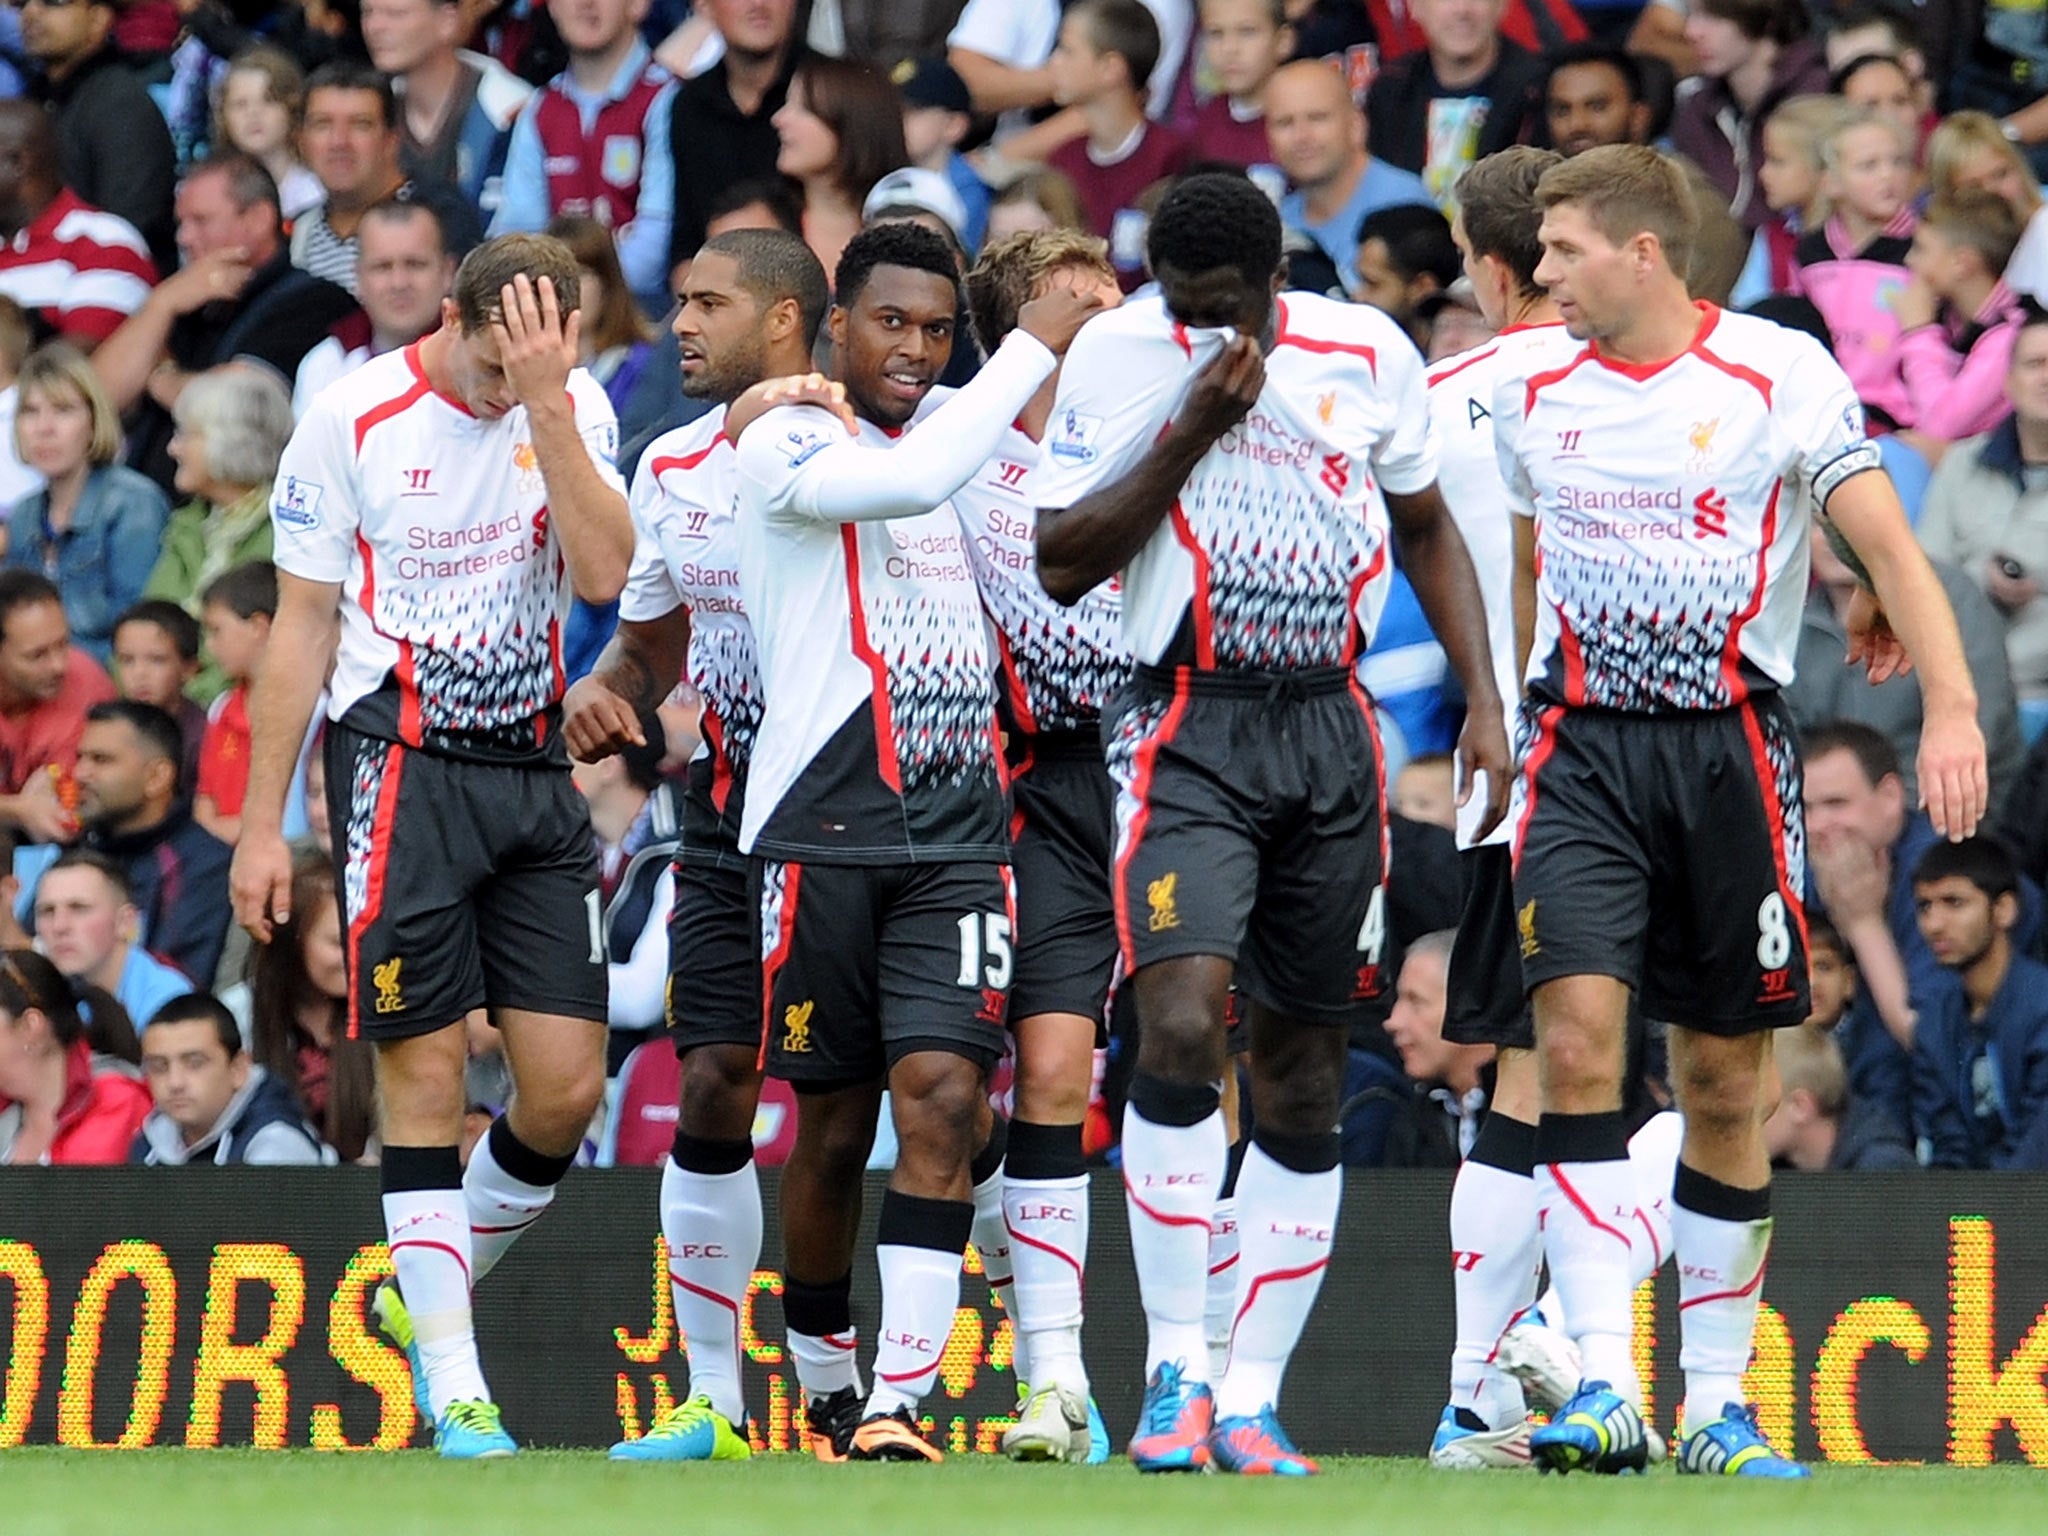 Liverpool celebrate a goal from Daniel Sturridge